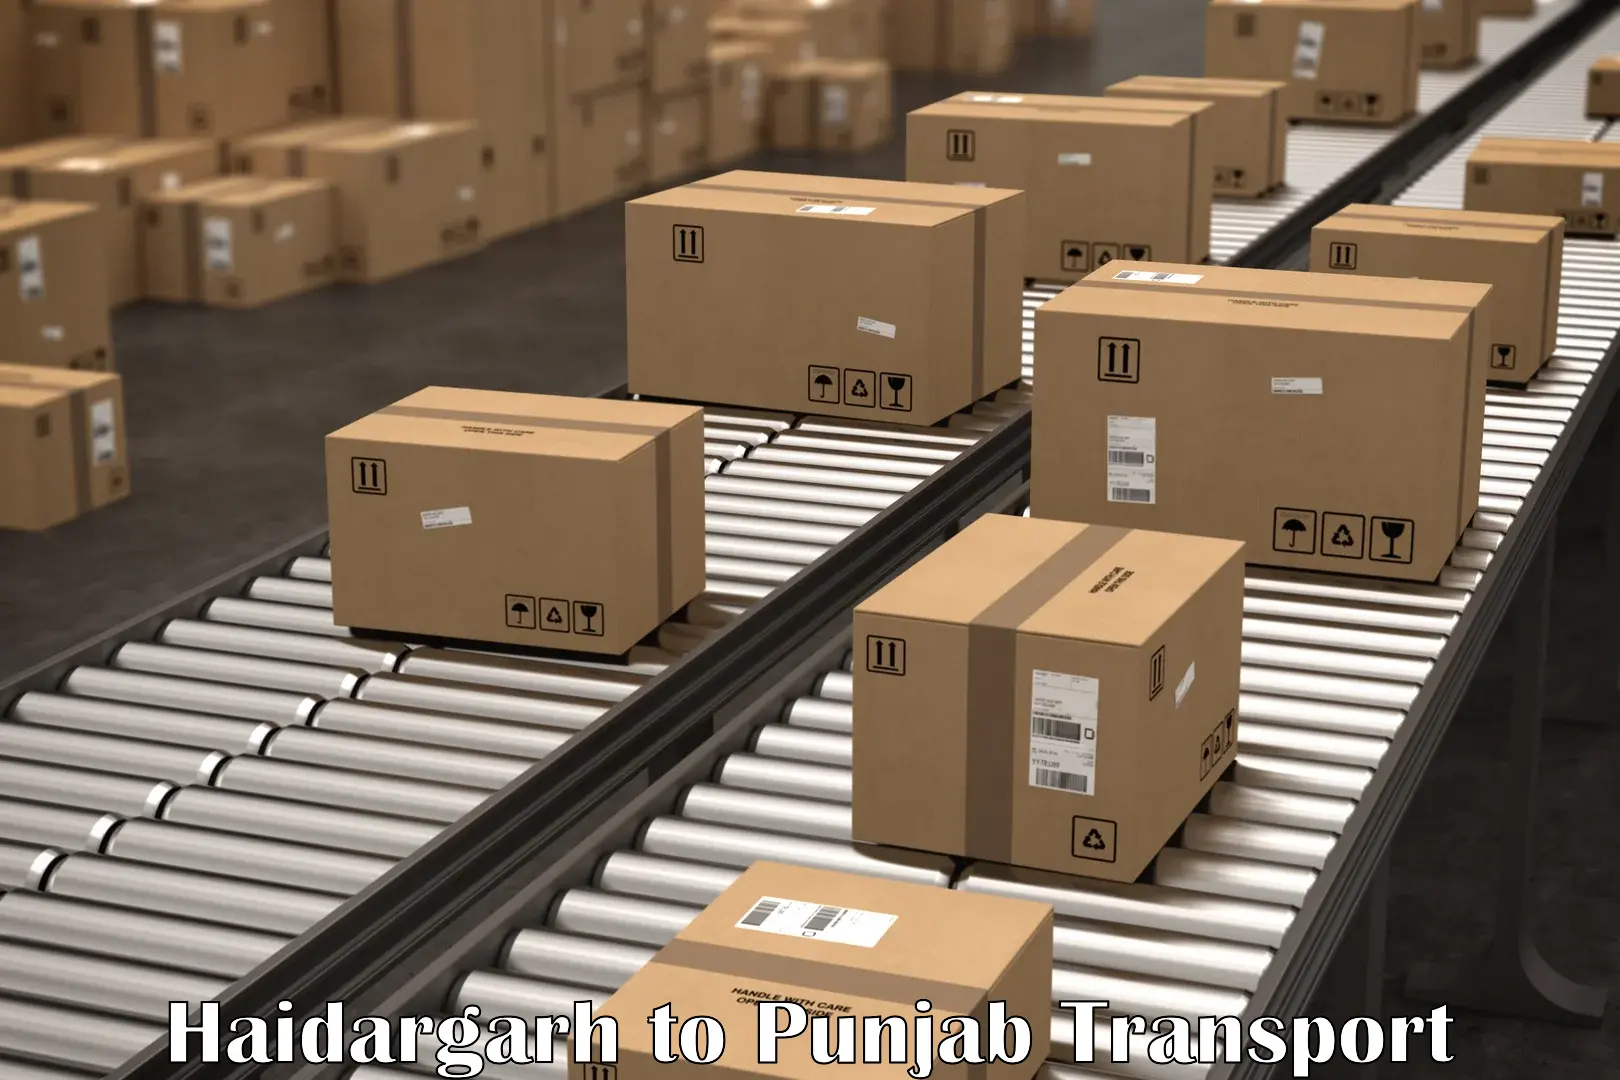 Daily parcel service transport Haidargarh to Punjab